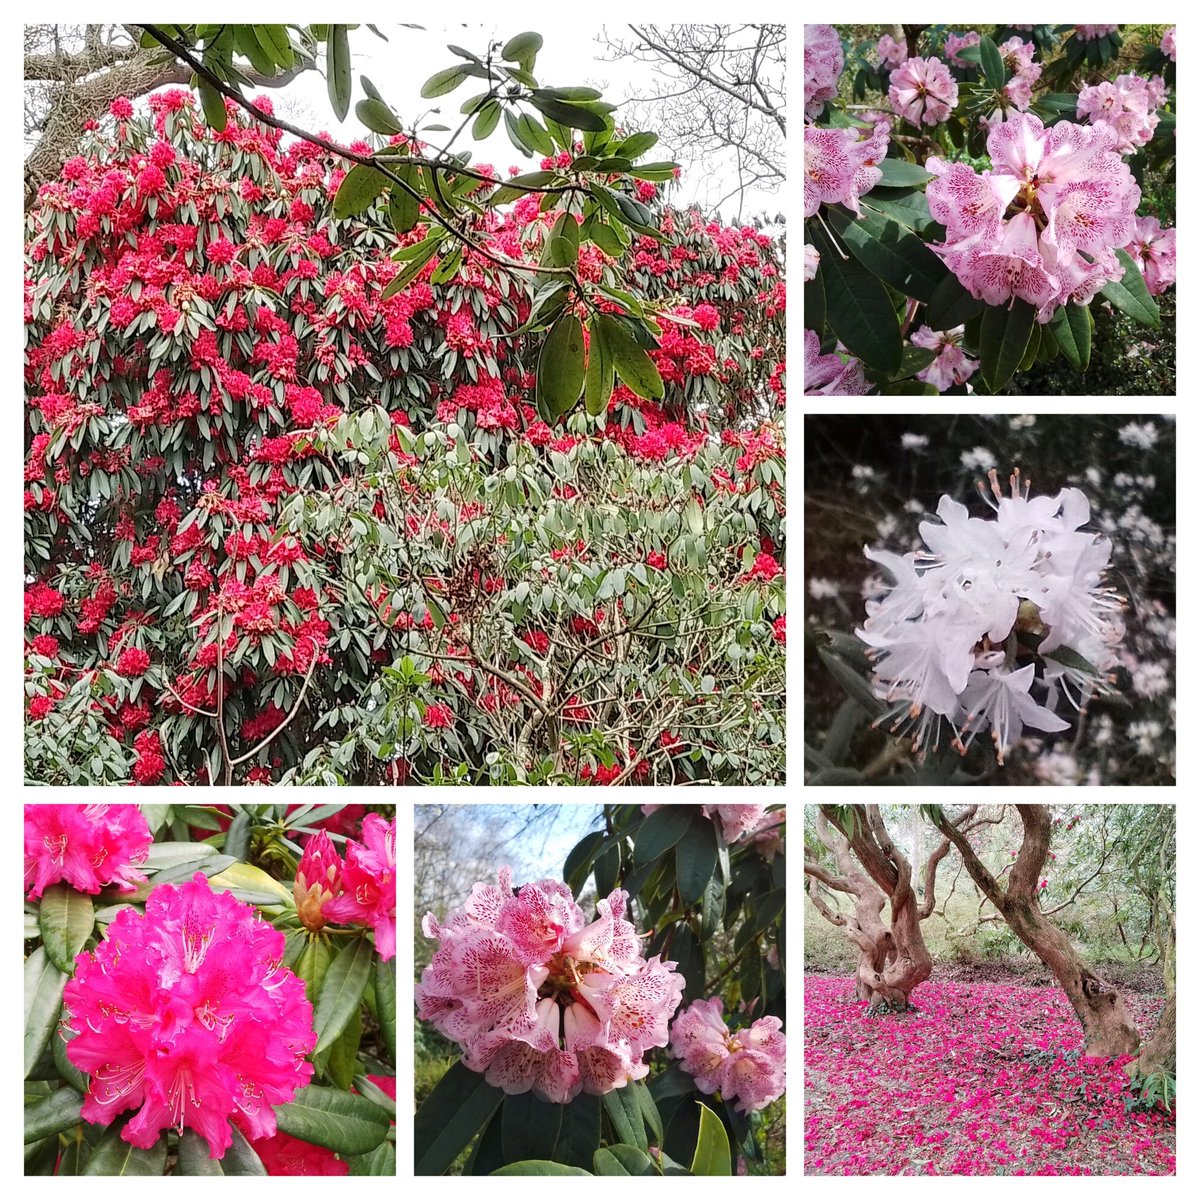 Some seasonal Rhododendrons for your Saturday #sixondaturday @exburygardens @FurzeyGardens